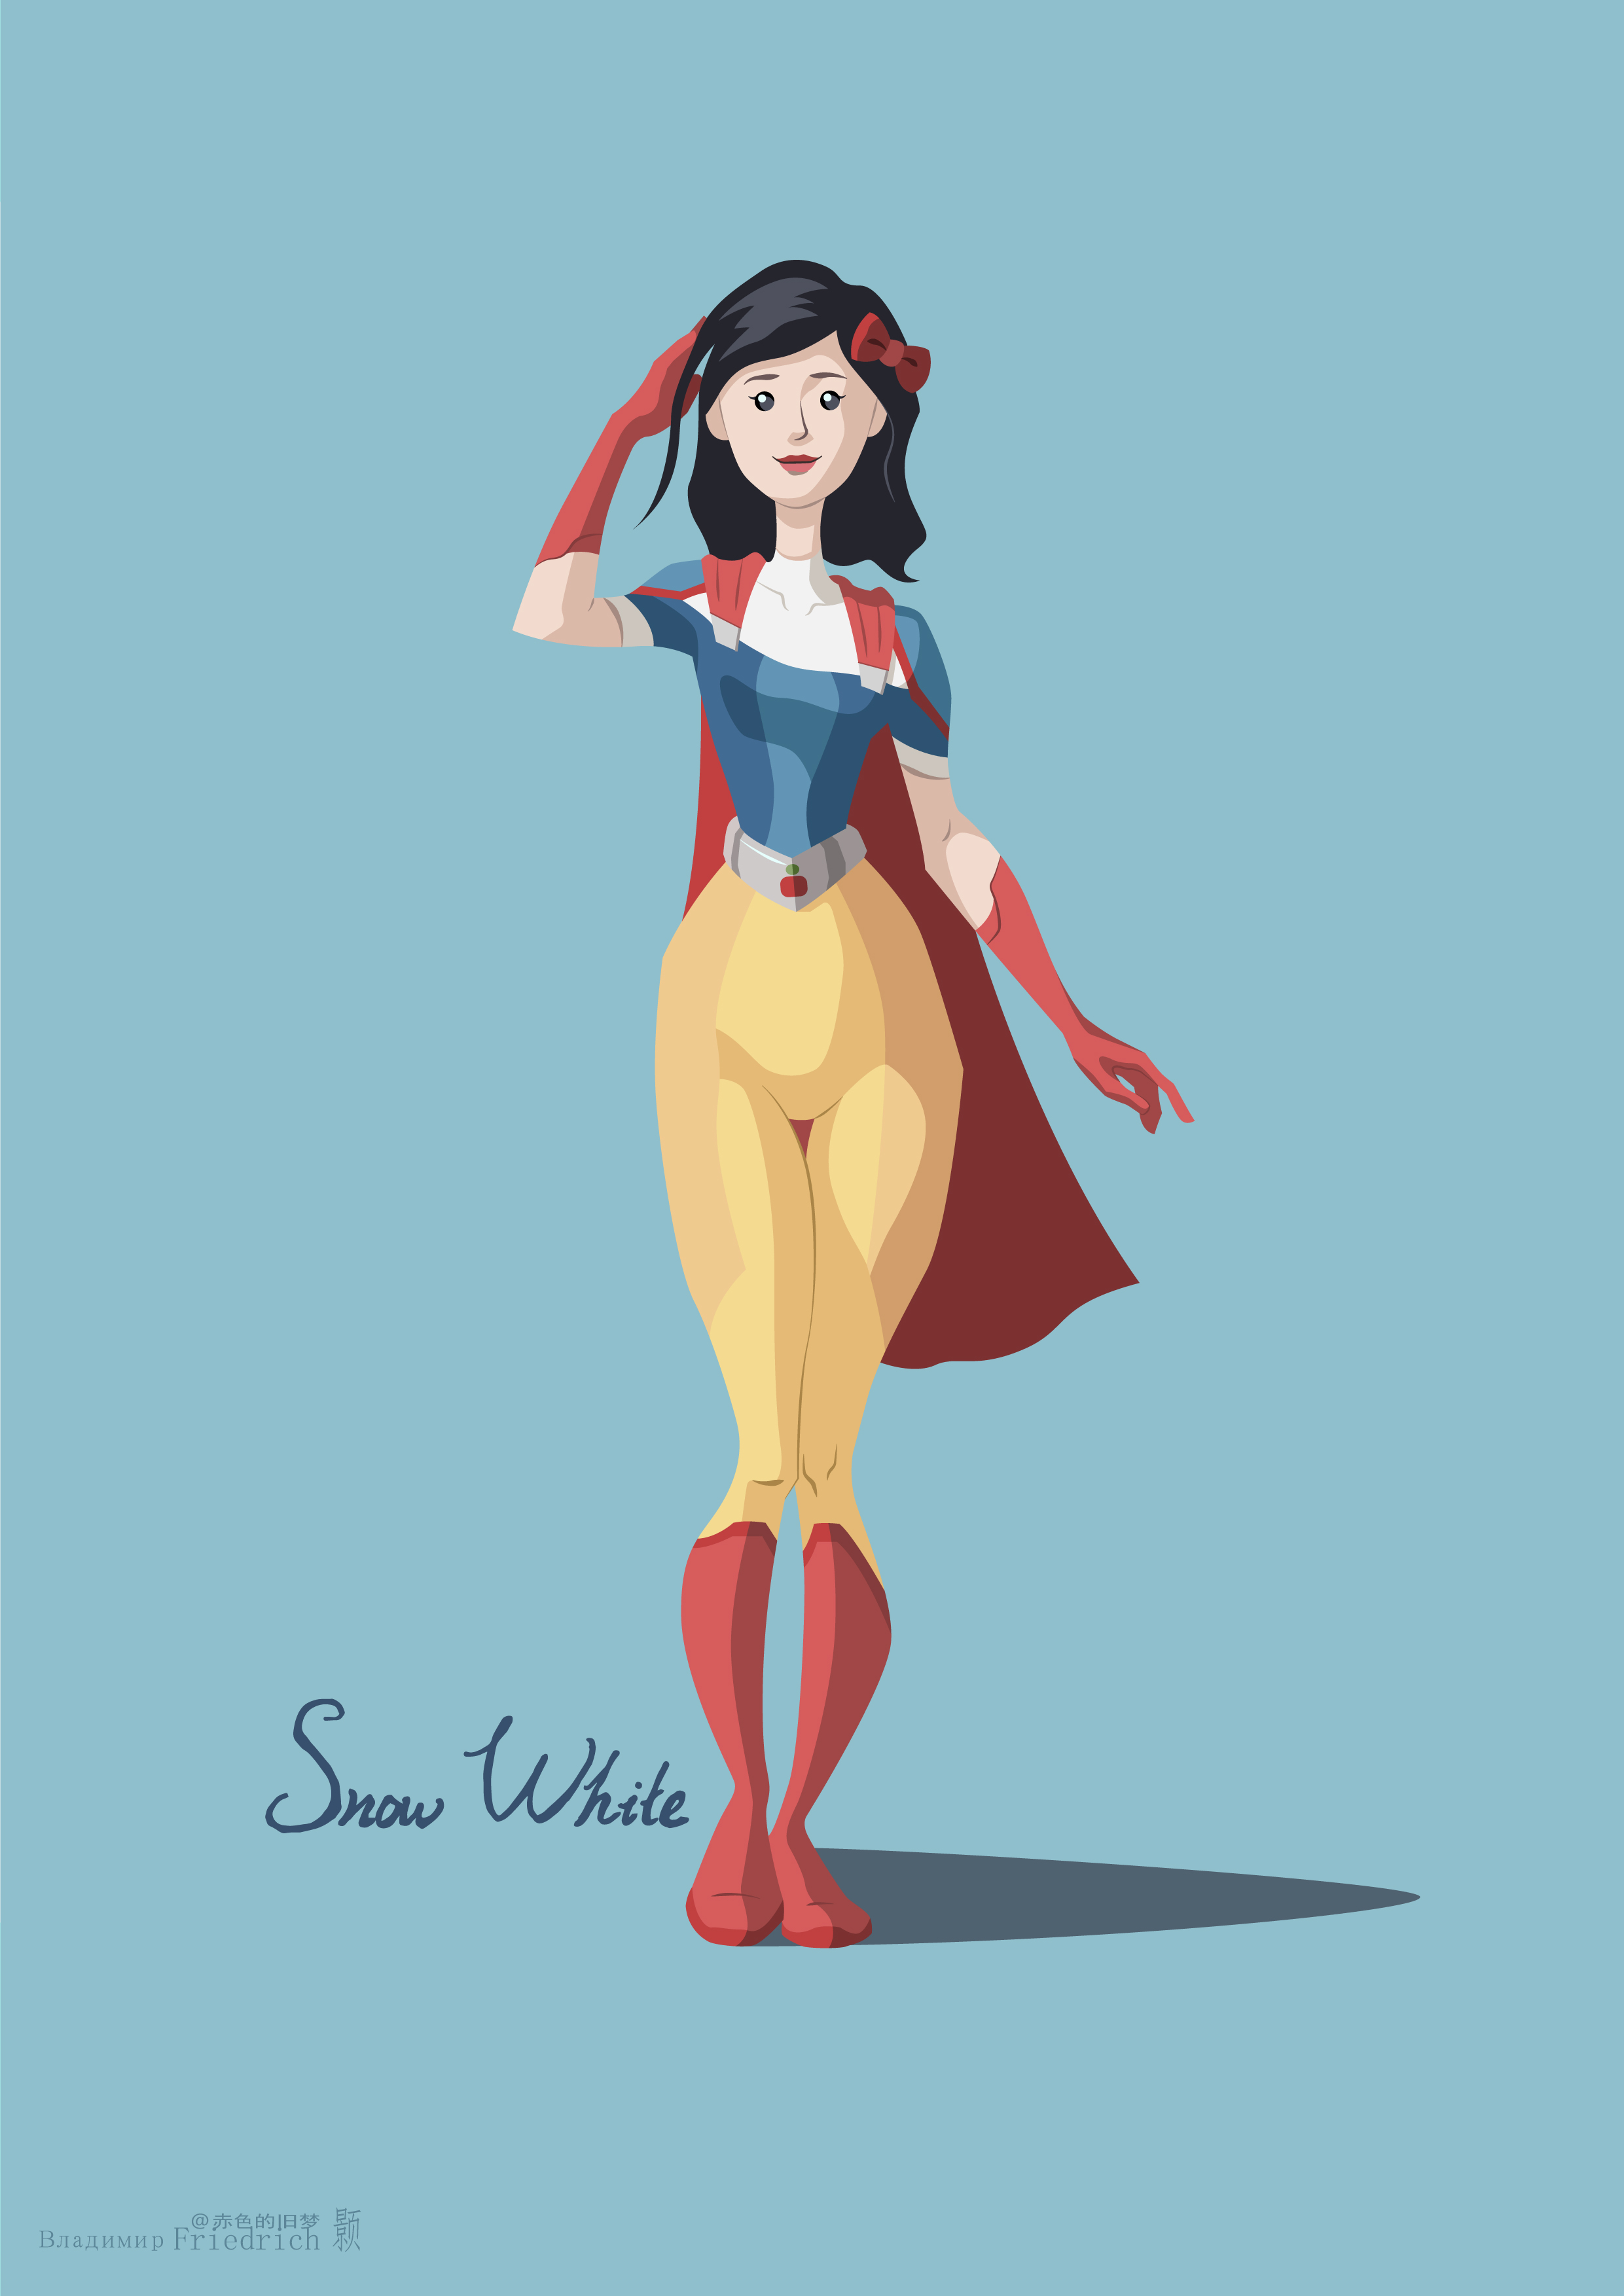 General 2481x3508 illustration Flatdesign Disney princesses Snow White superheroines superhero simple background minimalism portrait display